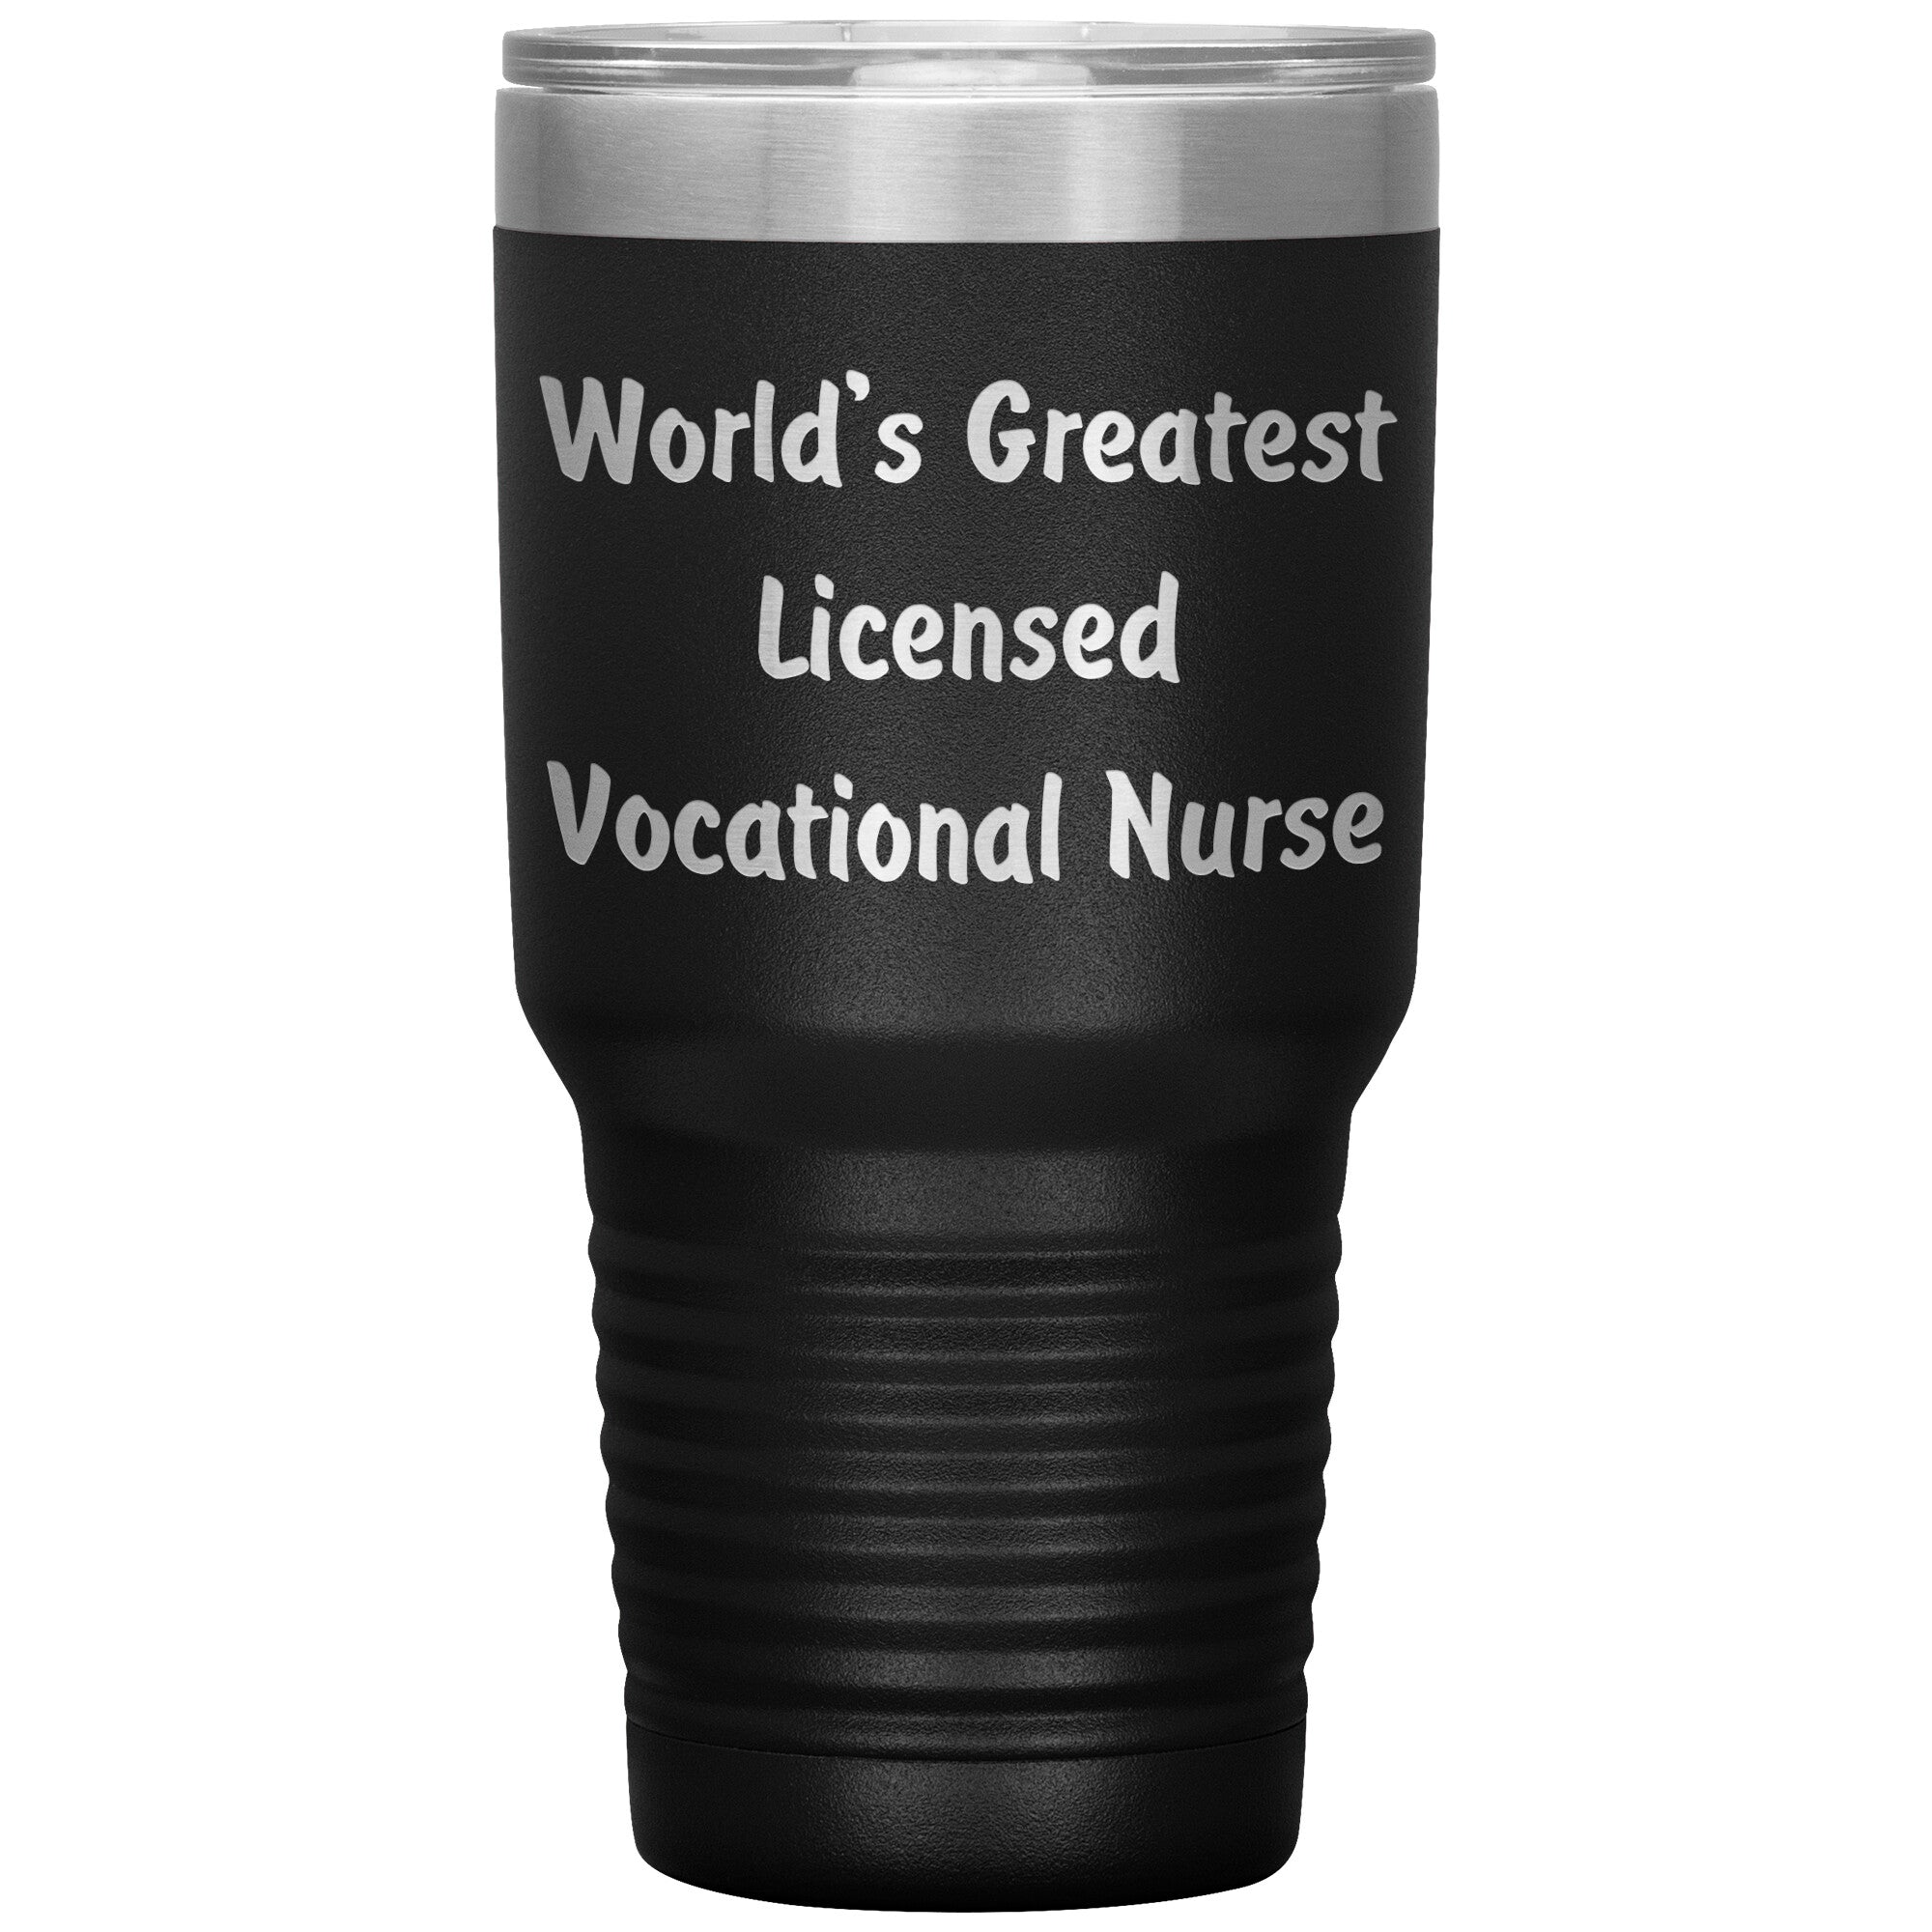 World's Greatest Licensed Vocational Nurse - 30oz Insulated Tumbler